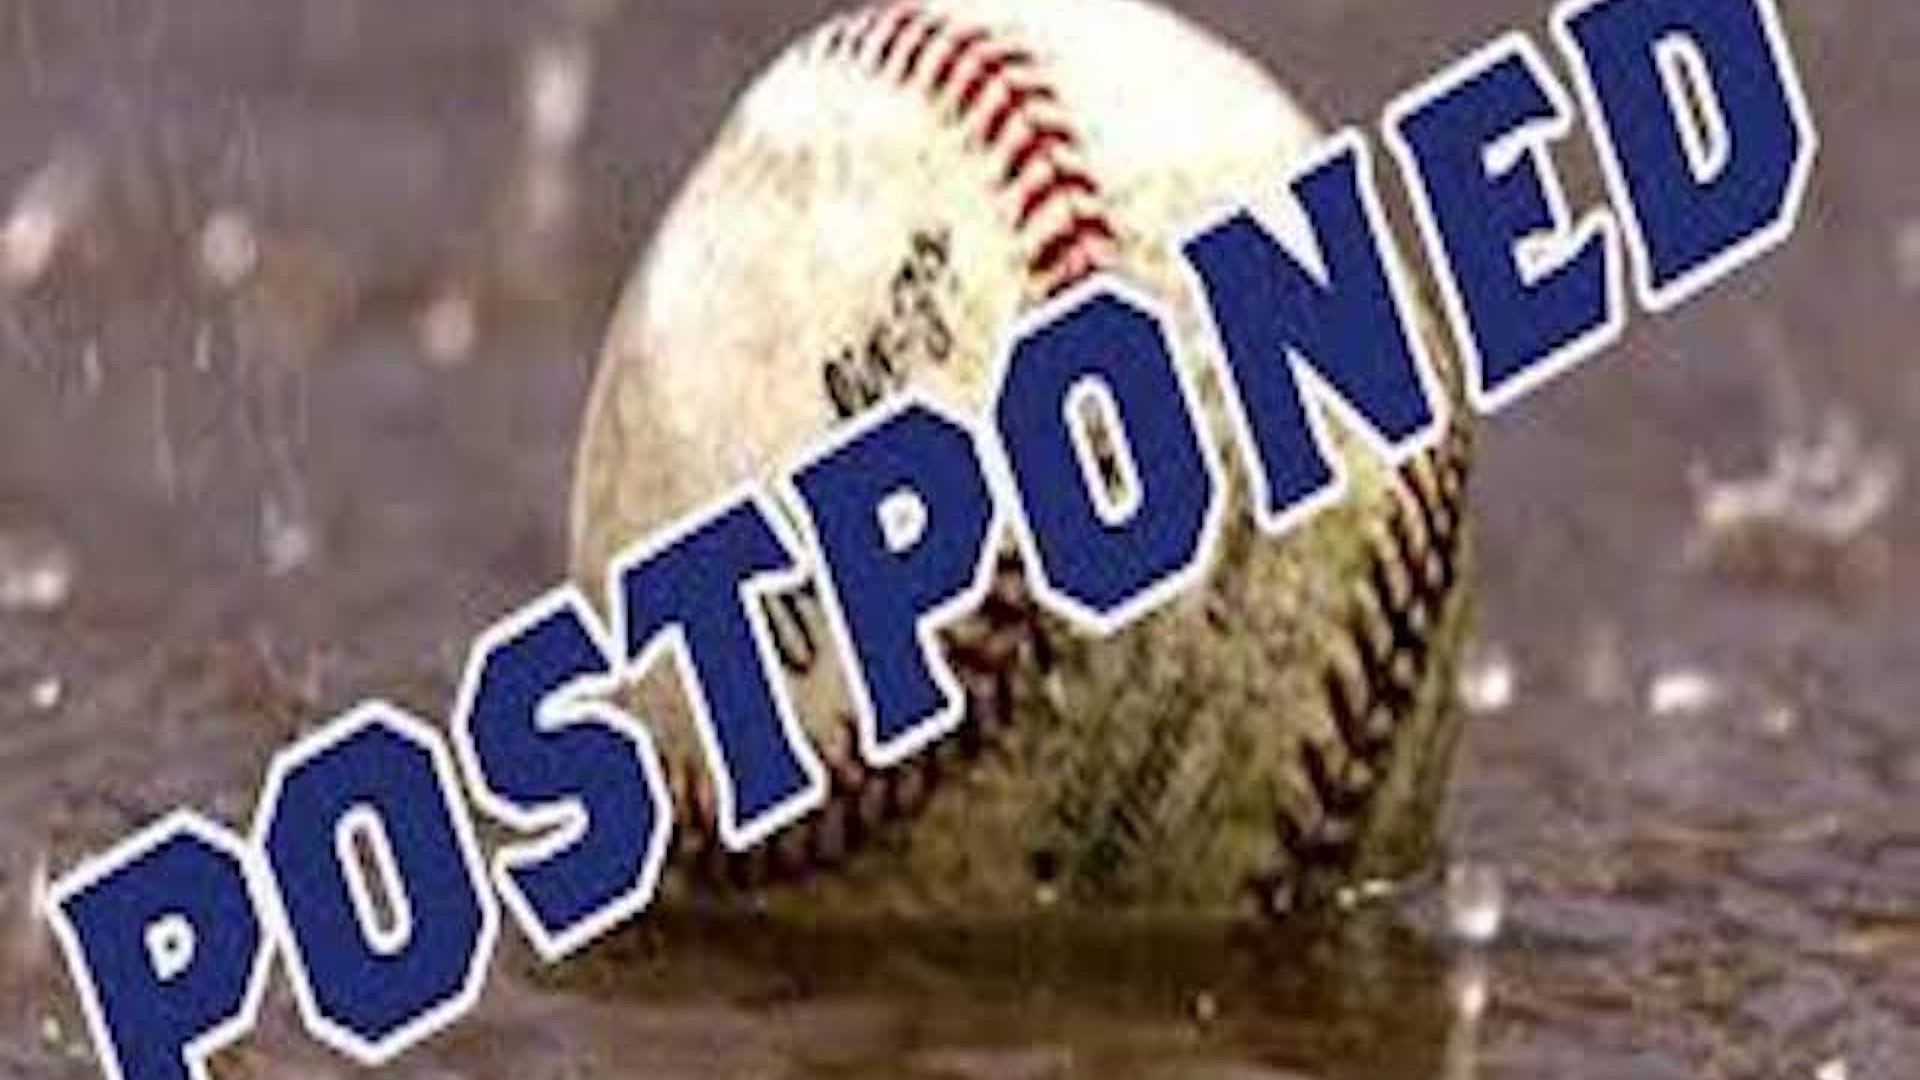 Slide 3 - Dragon Baseball game for tonight, postponed until tomorrow